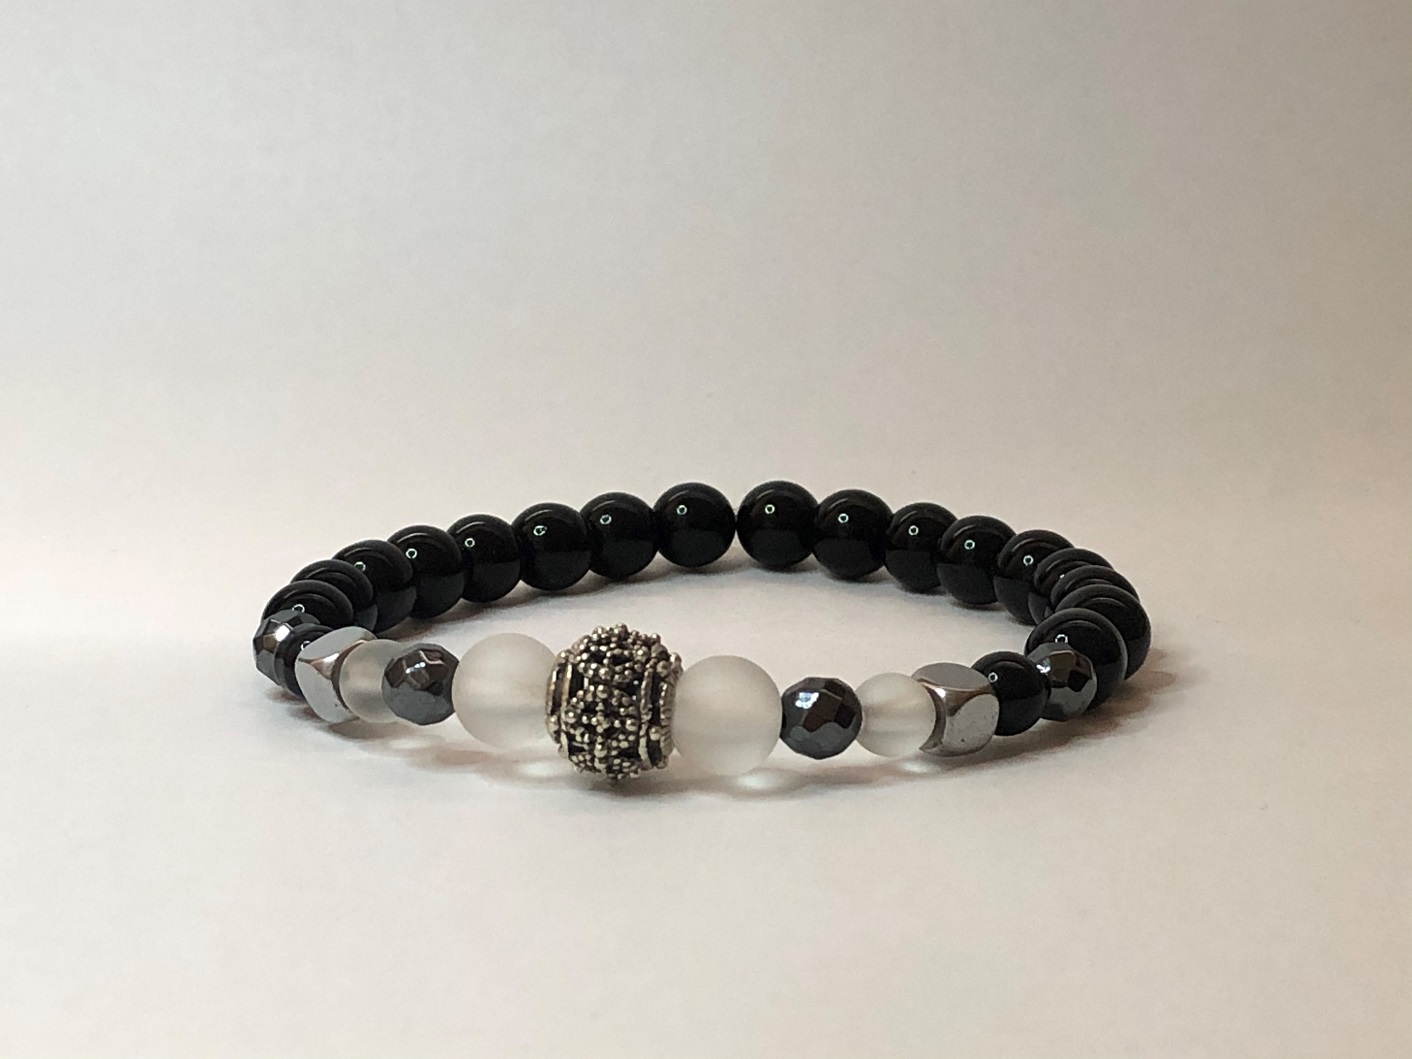 Shiny black onyx bracelet with glass and pendant